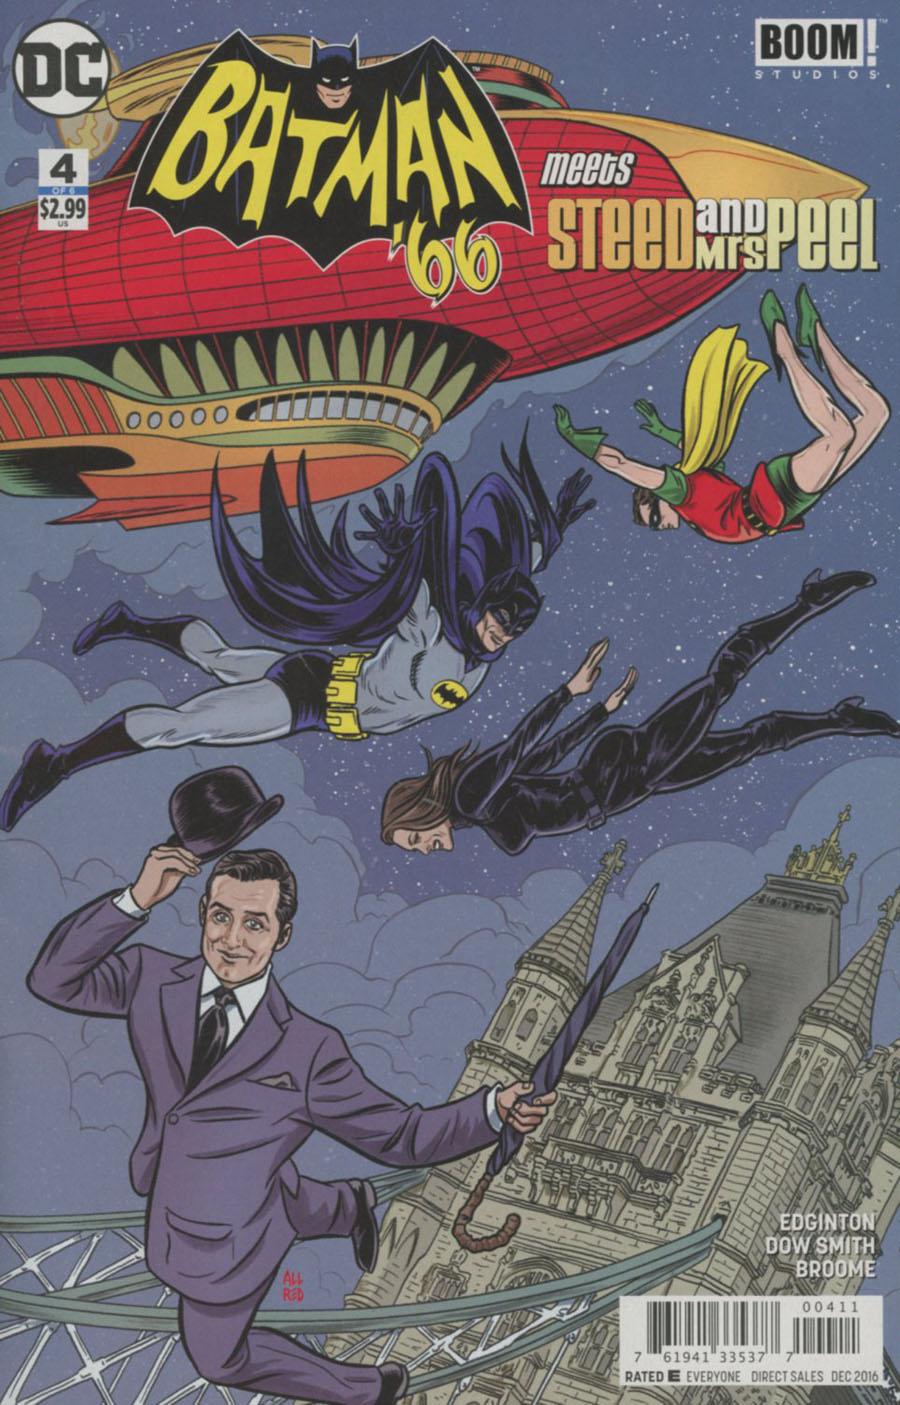 Batman 66 Meets Steed And Mrs Peel Vol. 1 #4